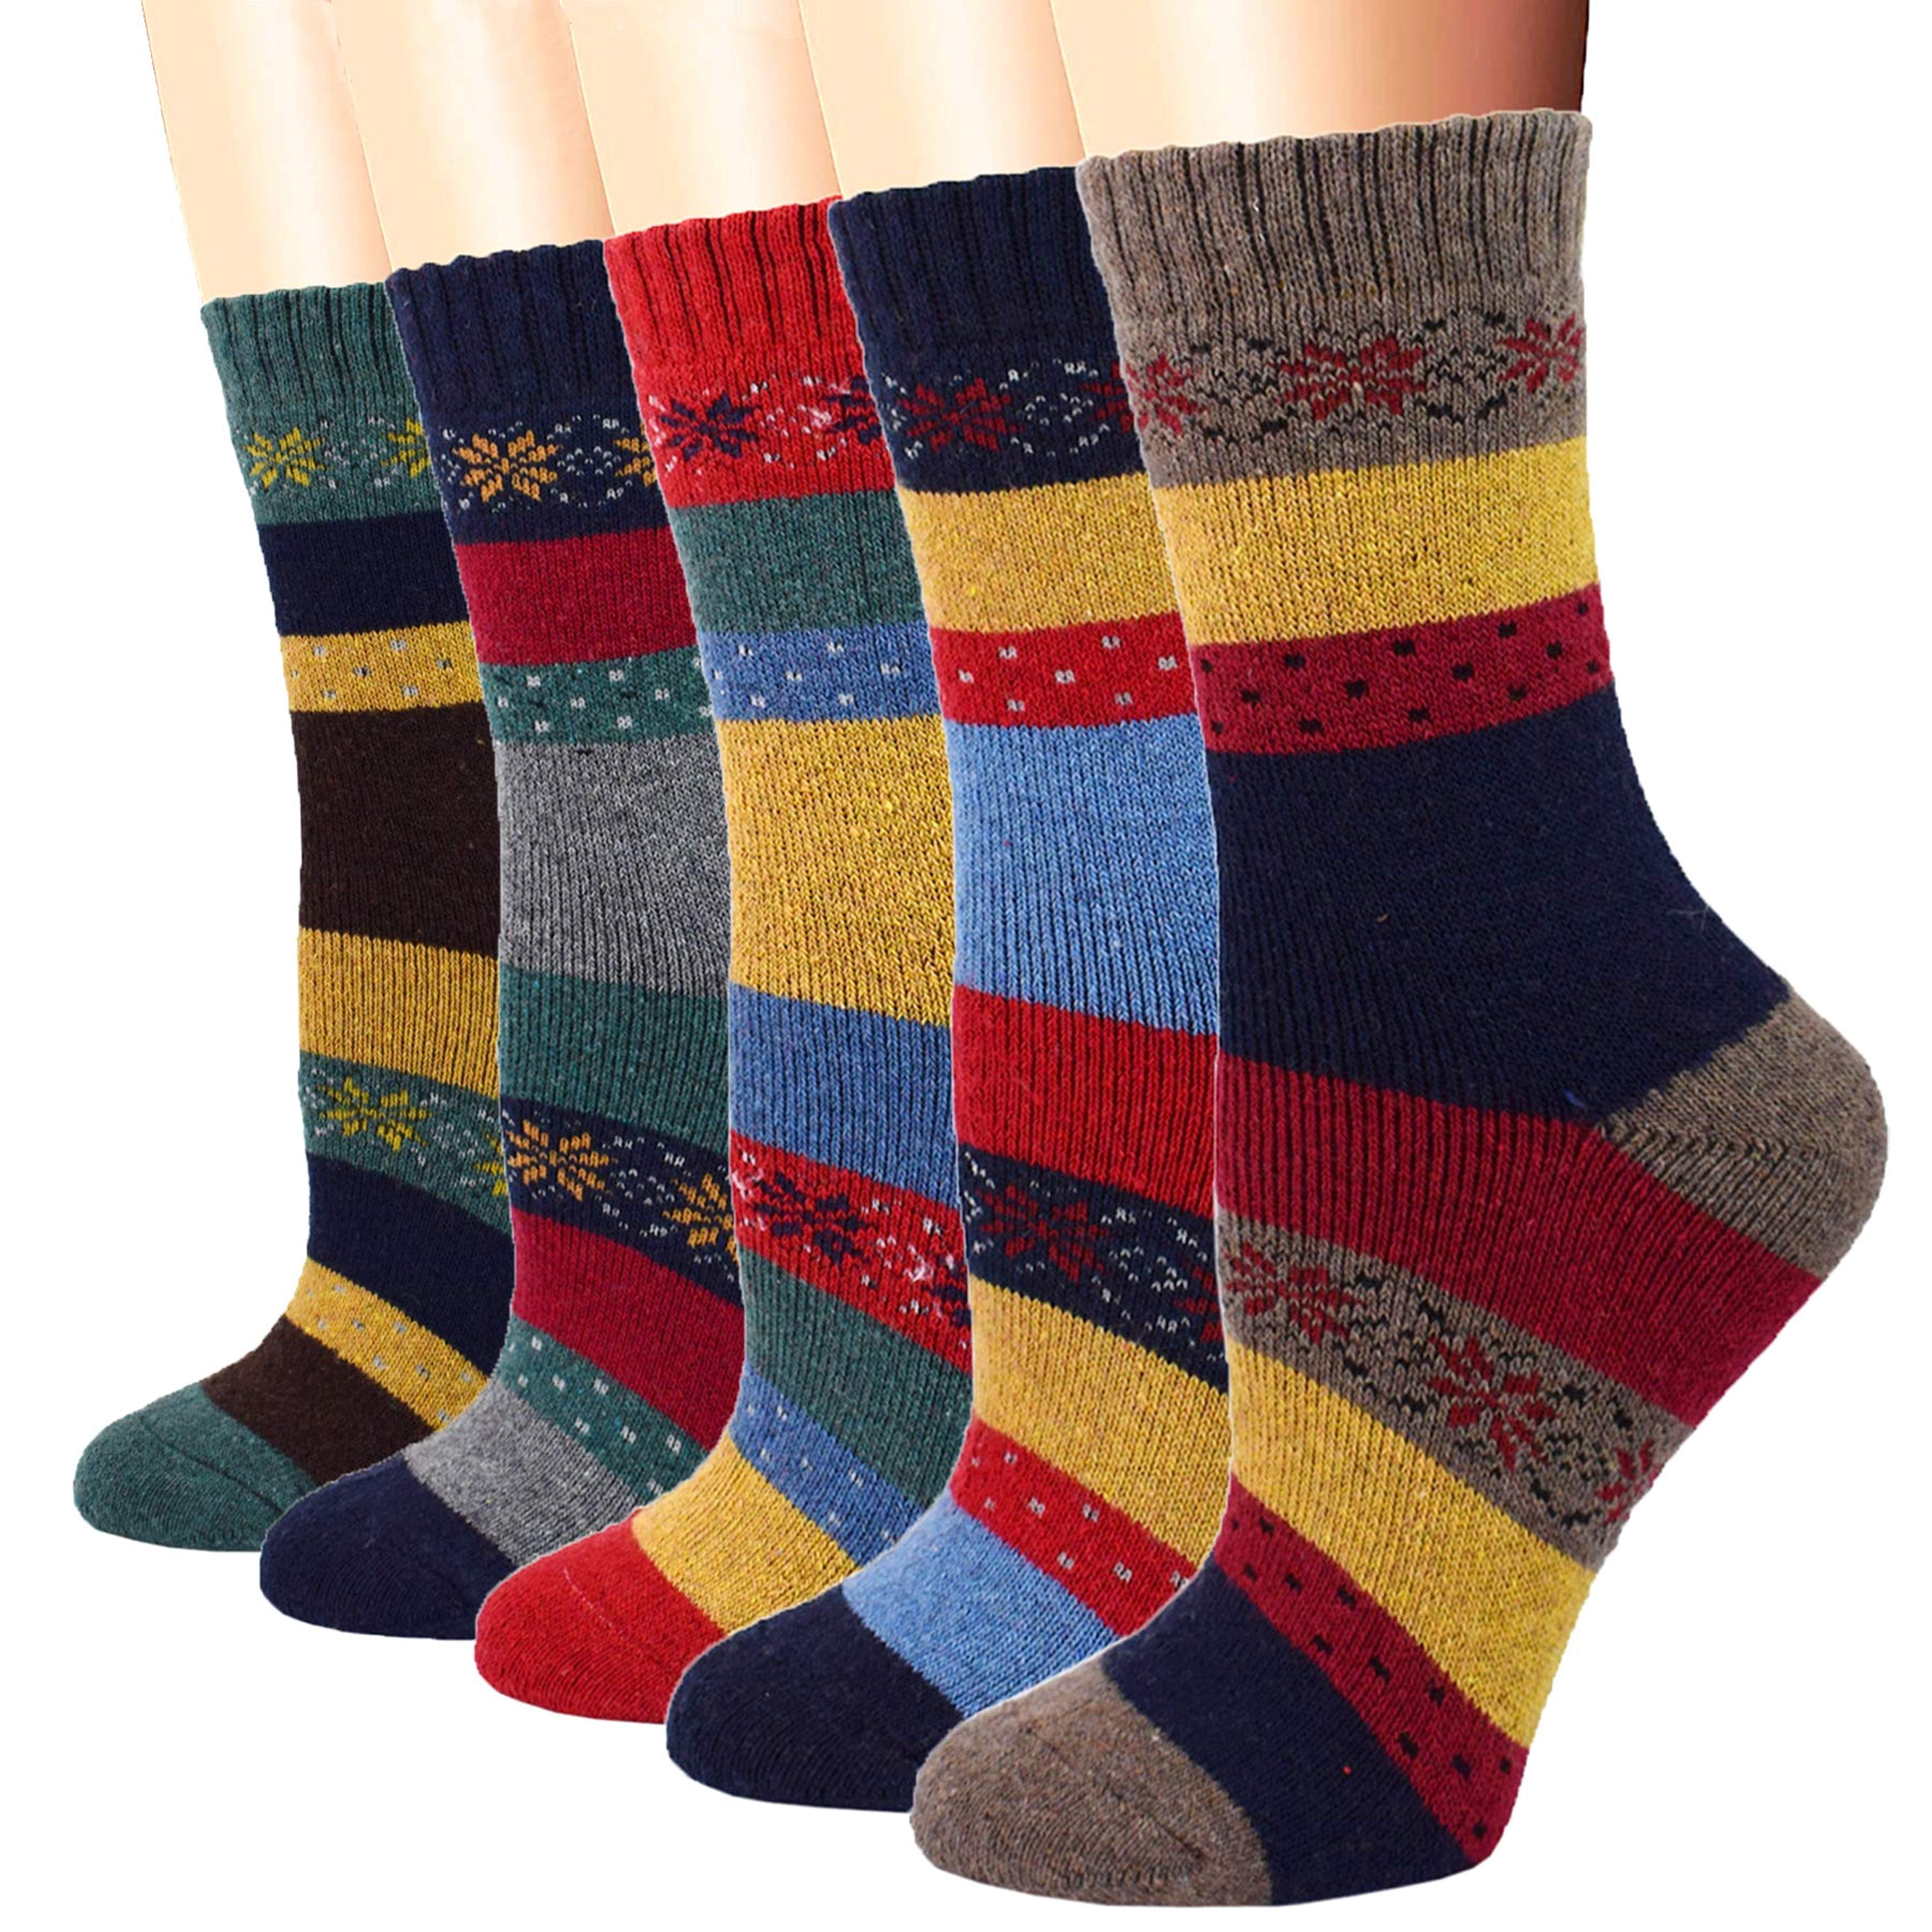 Warm Socks Vintage Cozy Socks 5 Pairs Wool Socks Fashion Soft Crew Hiking Socks Gifts Thick Knit Winter Socks 